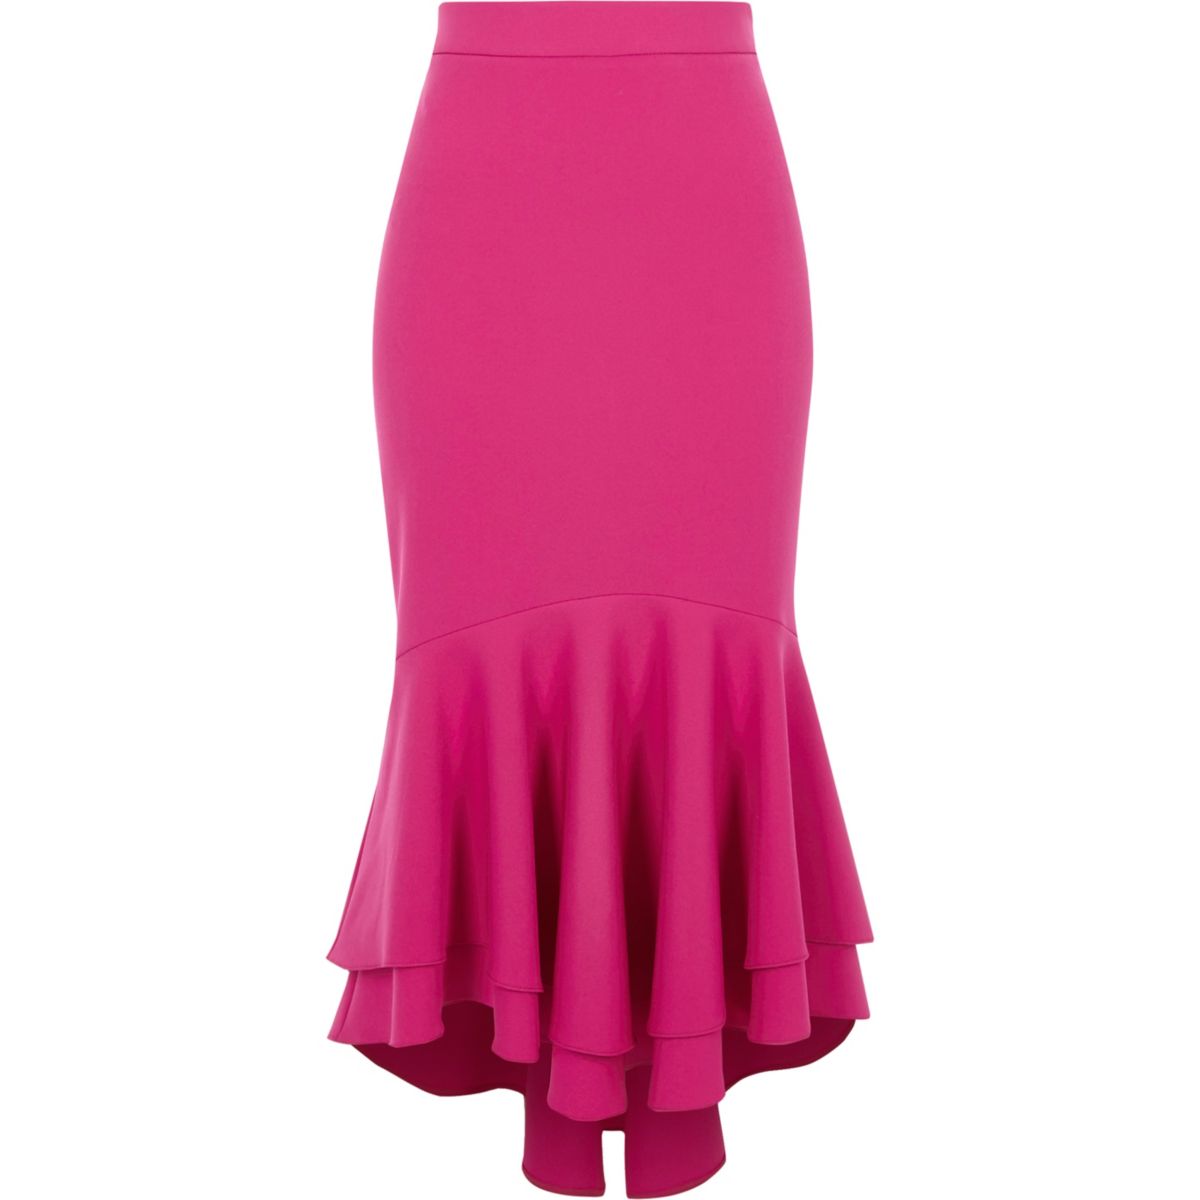 Pink tiered frill fishtail pencil skirt - Skirts - Sale - women